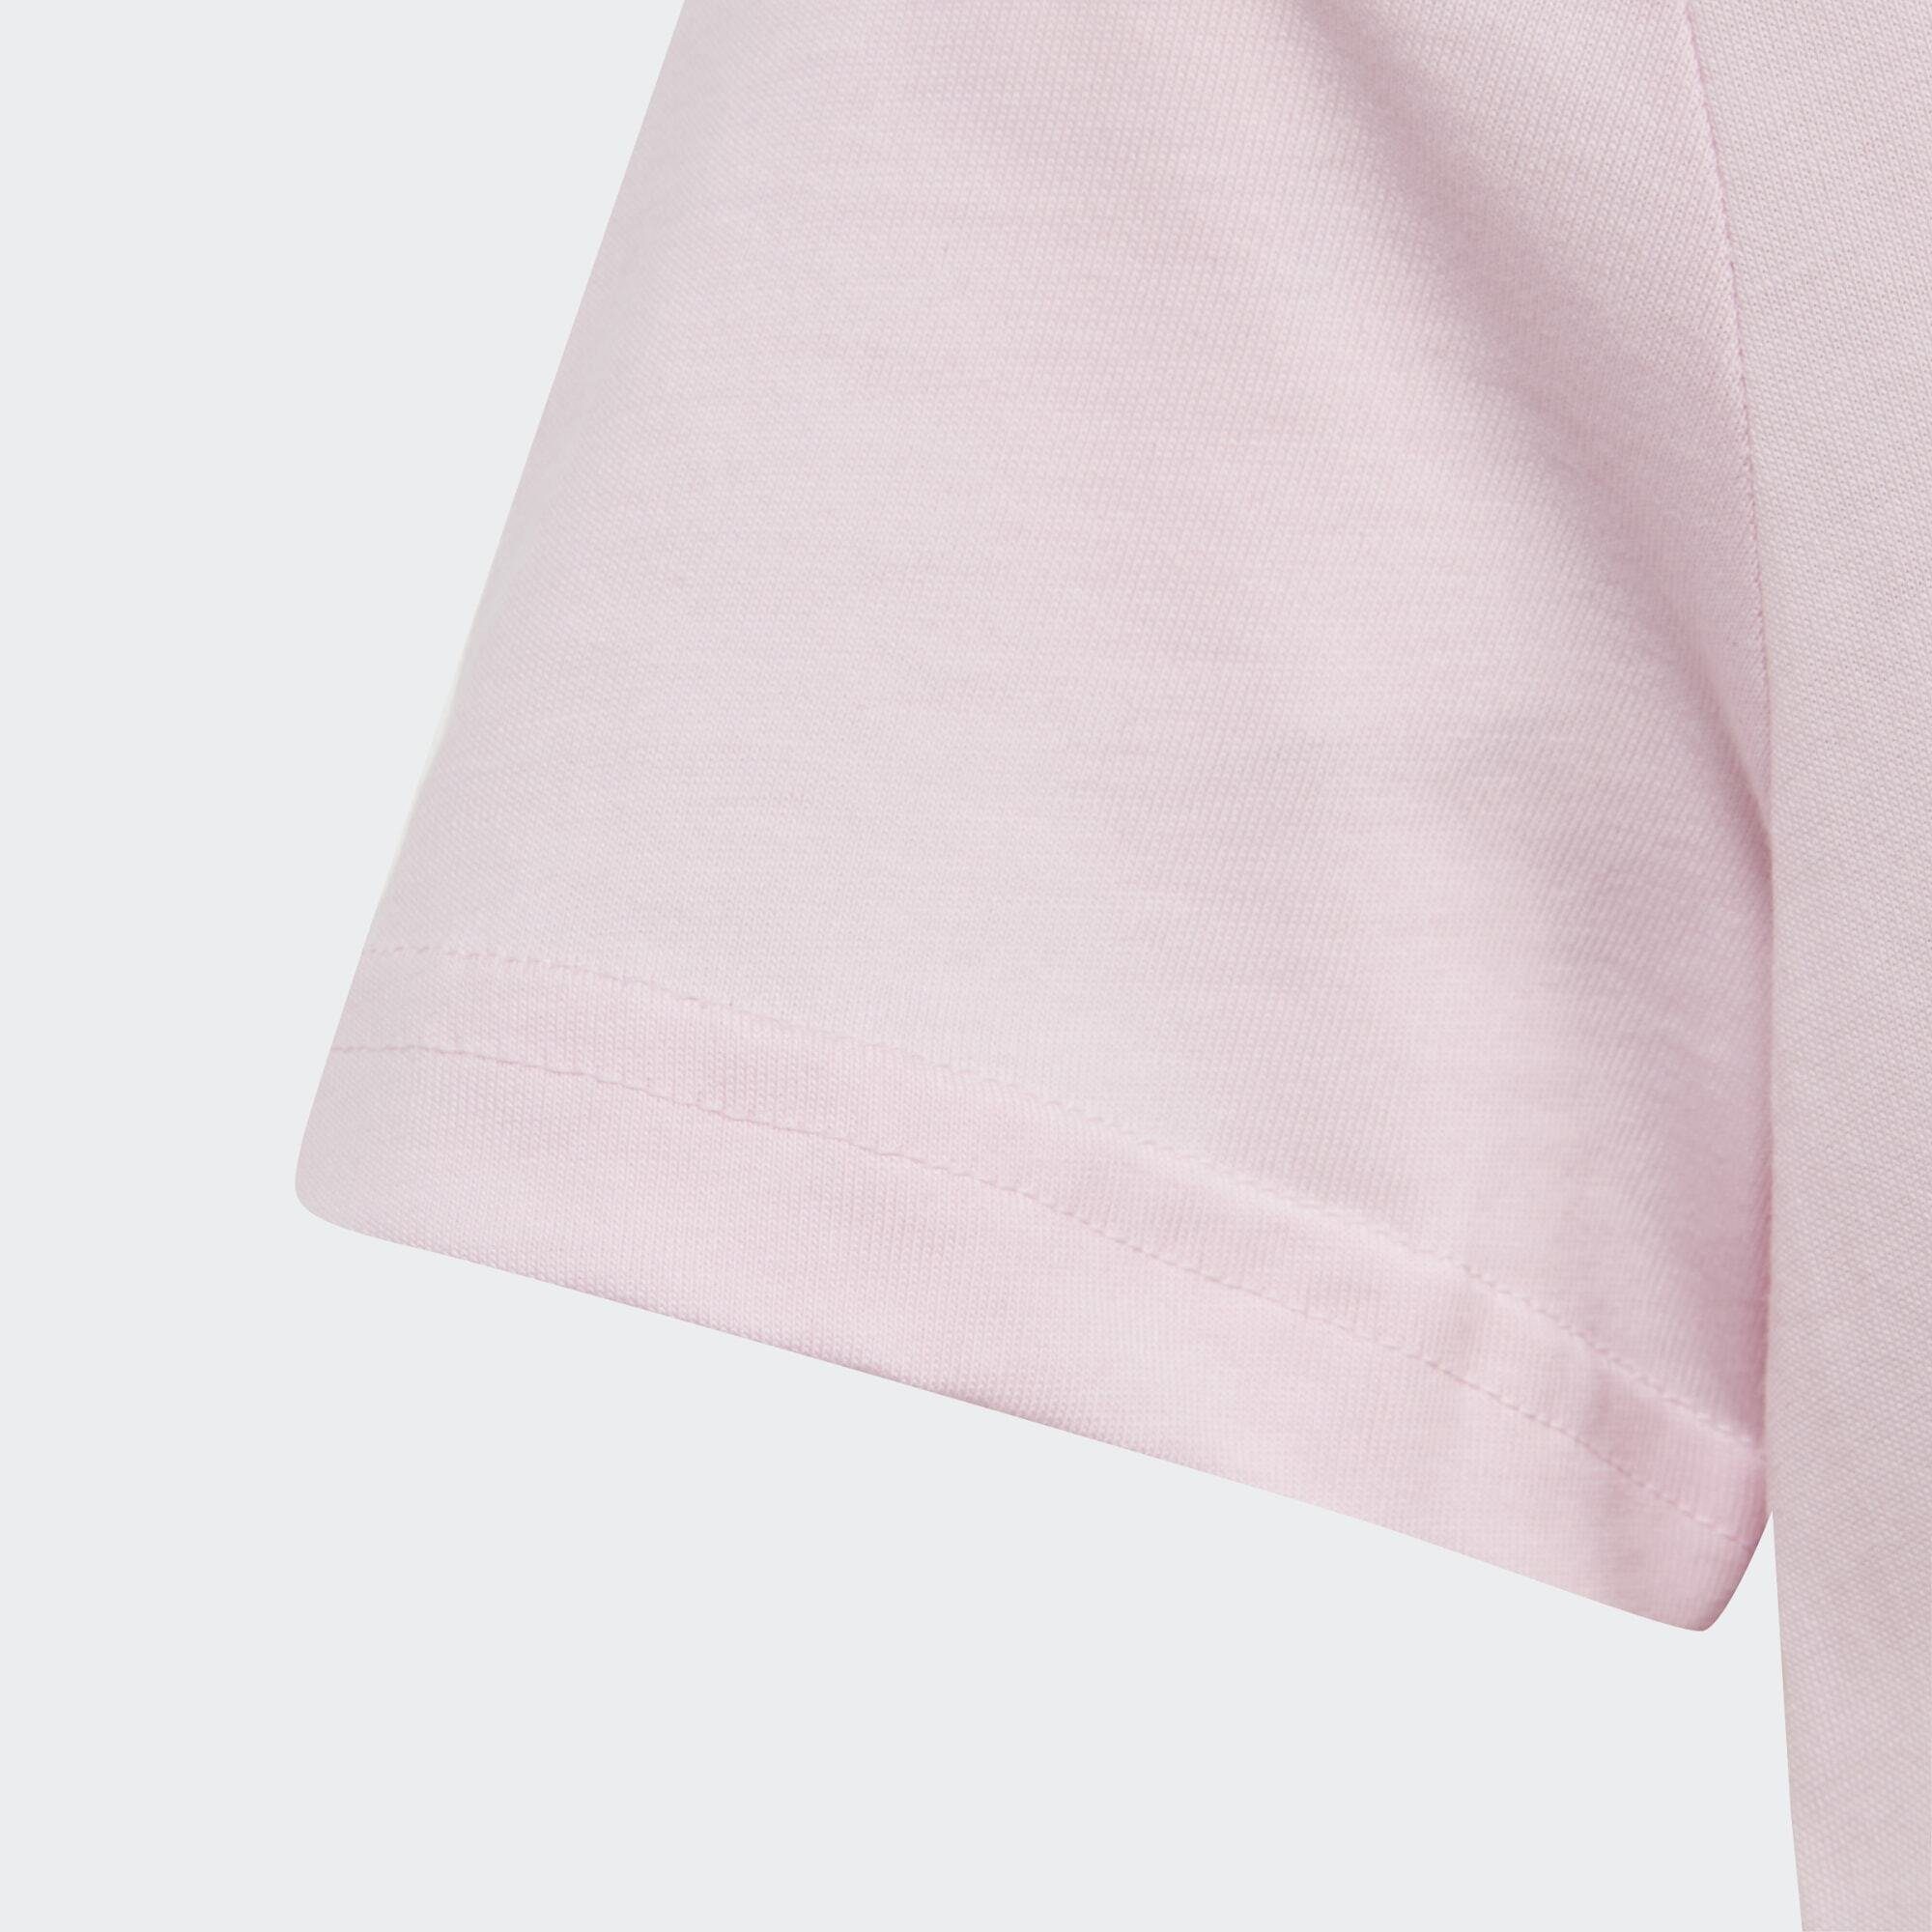 COTTON White FIT Clear Sportswear T-SHIRT adidas Pink LOGO T-Shirt LINEAR / SLIM ESSENTIALS